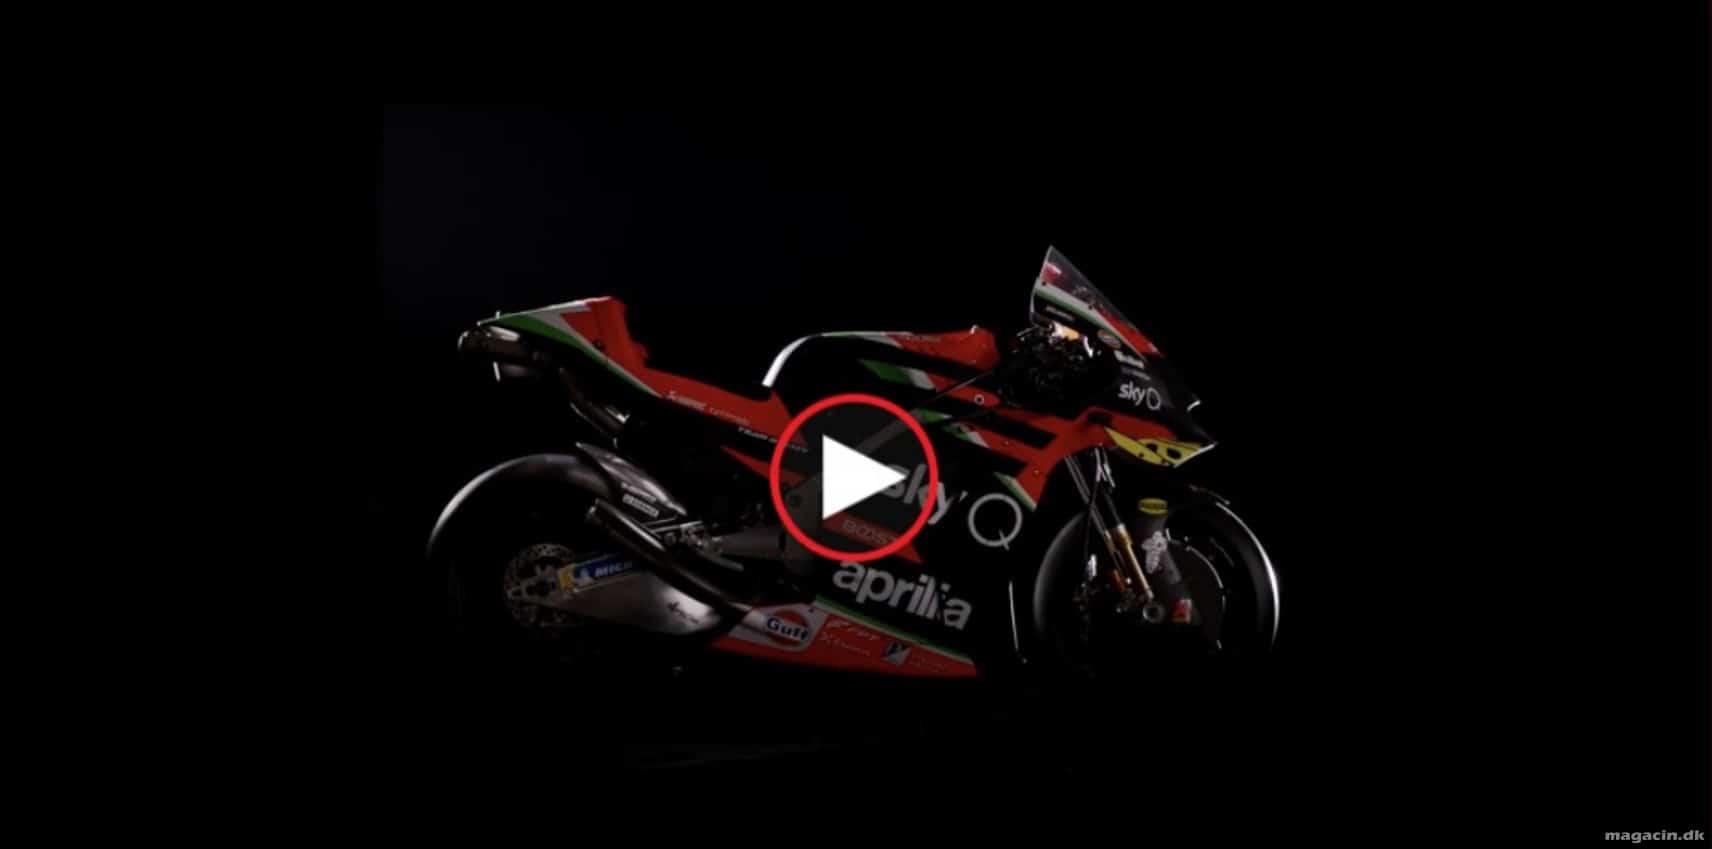 Tæt på Aprilia's 2020 MotoGP racer